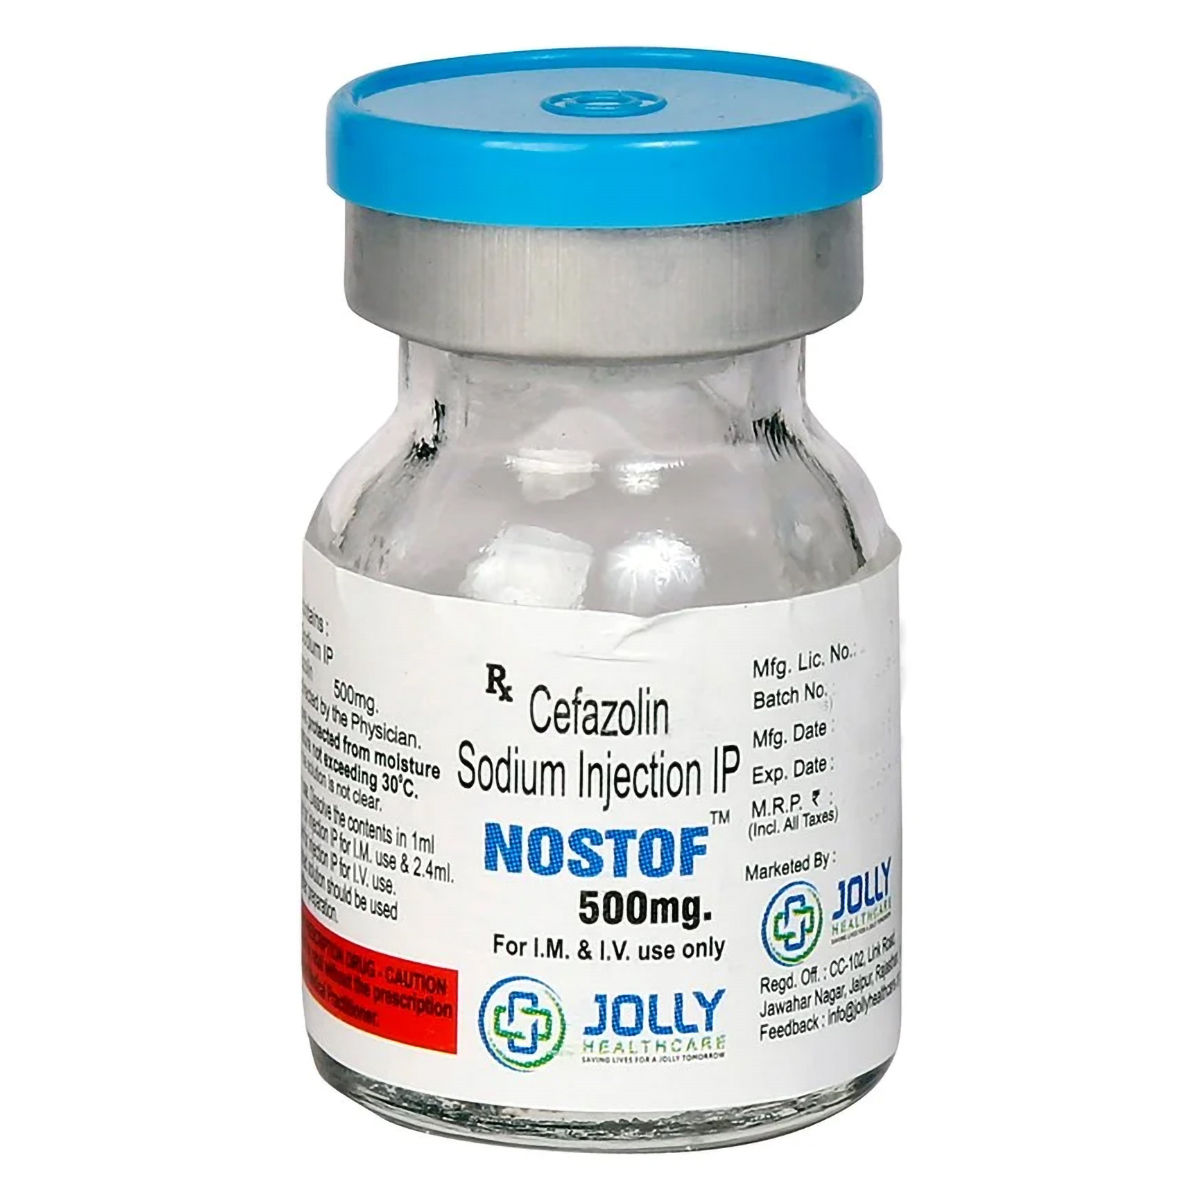 Buy Nostof 500mg Injection 1's Online